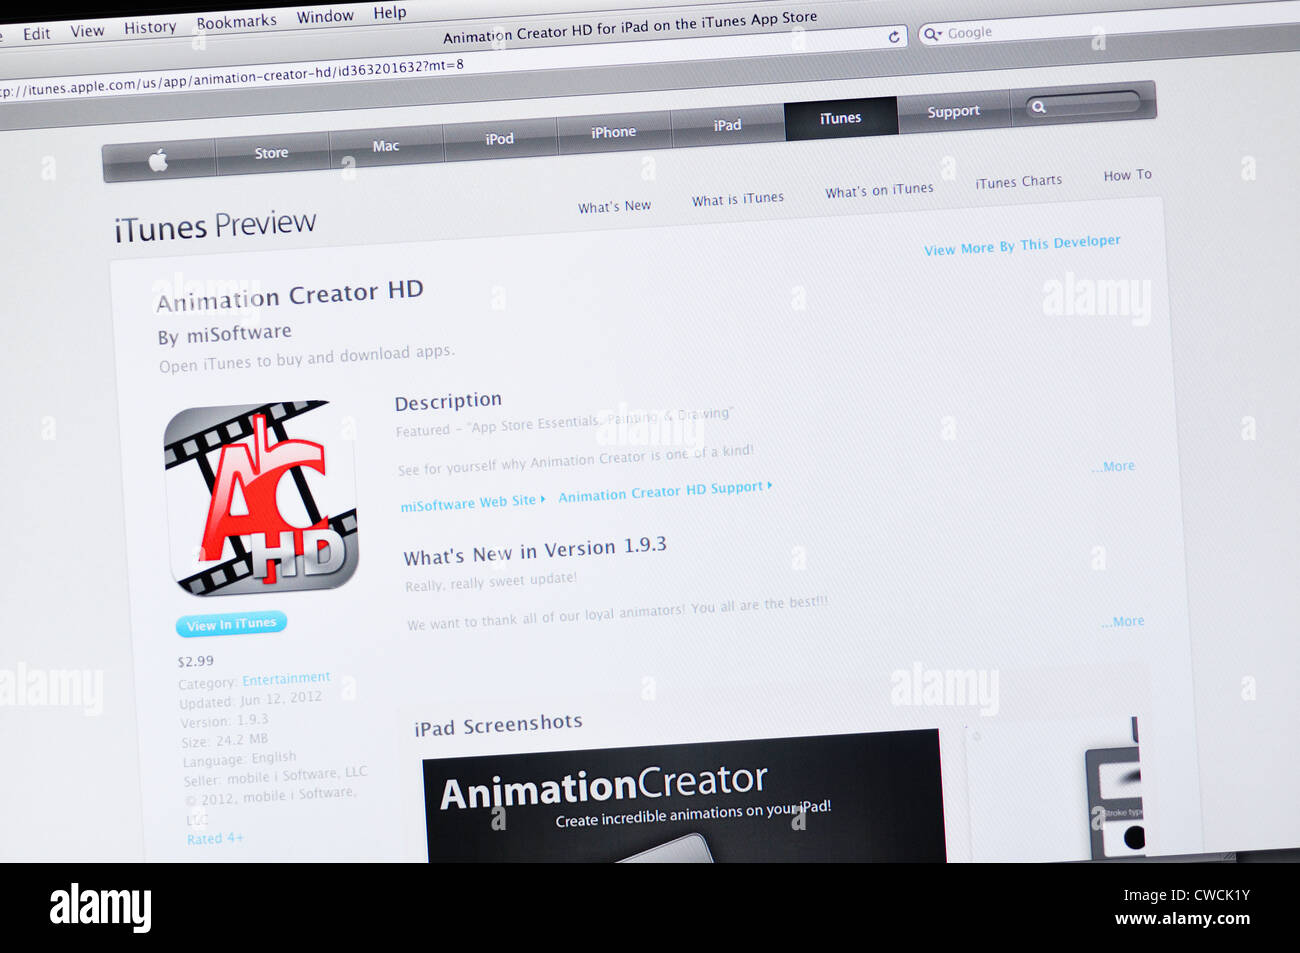 Animation Creator app Website - Mobile Animation Studio Stockfotografie